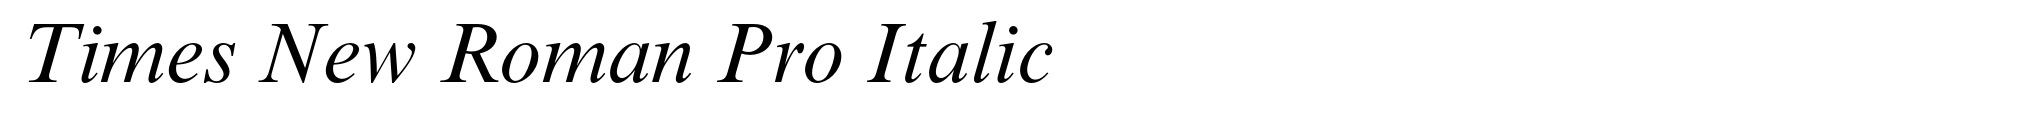 Times New Roman Pro Italic image